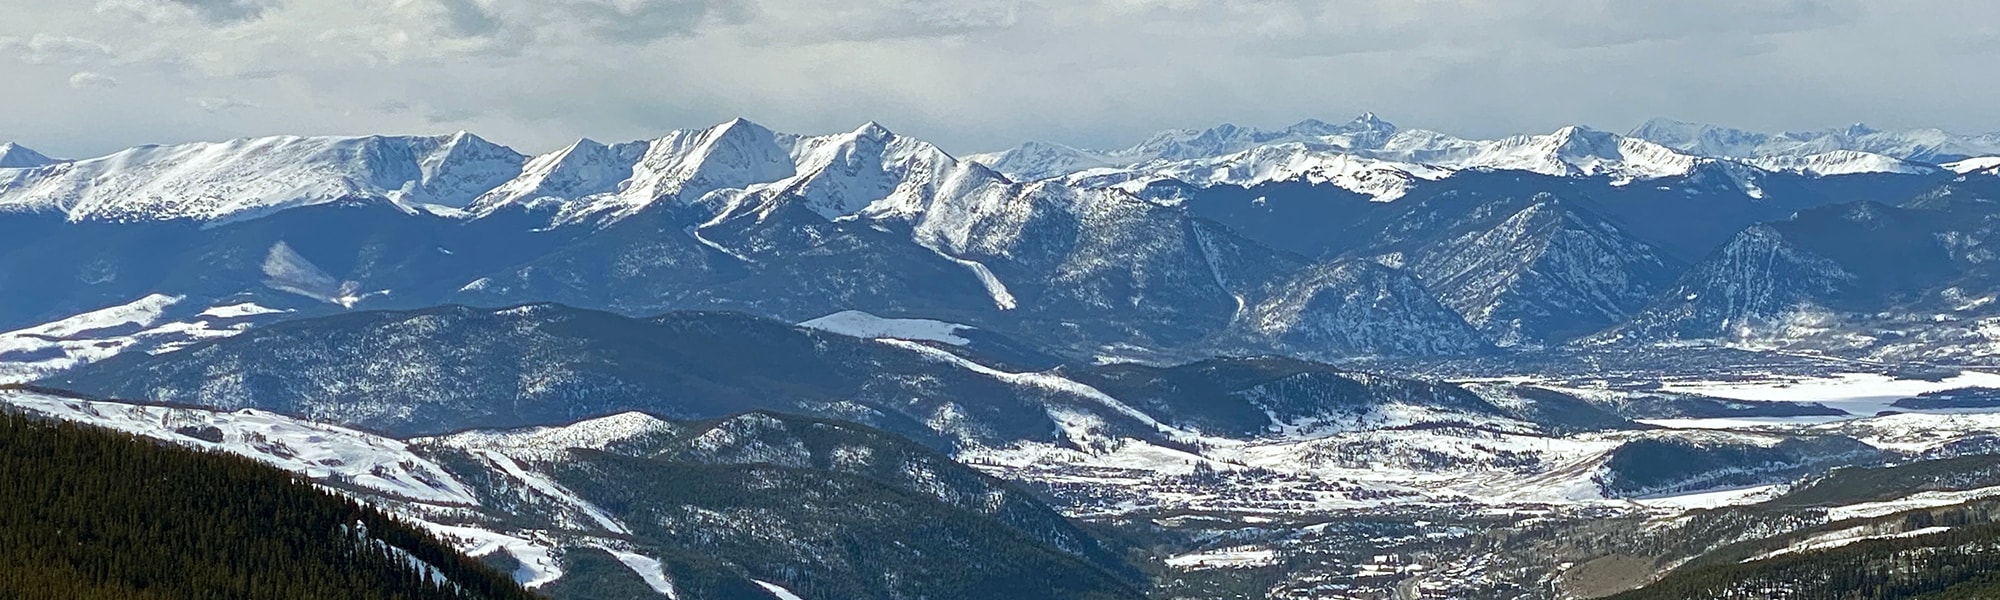 Colorado Summit County mountain range